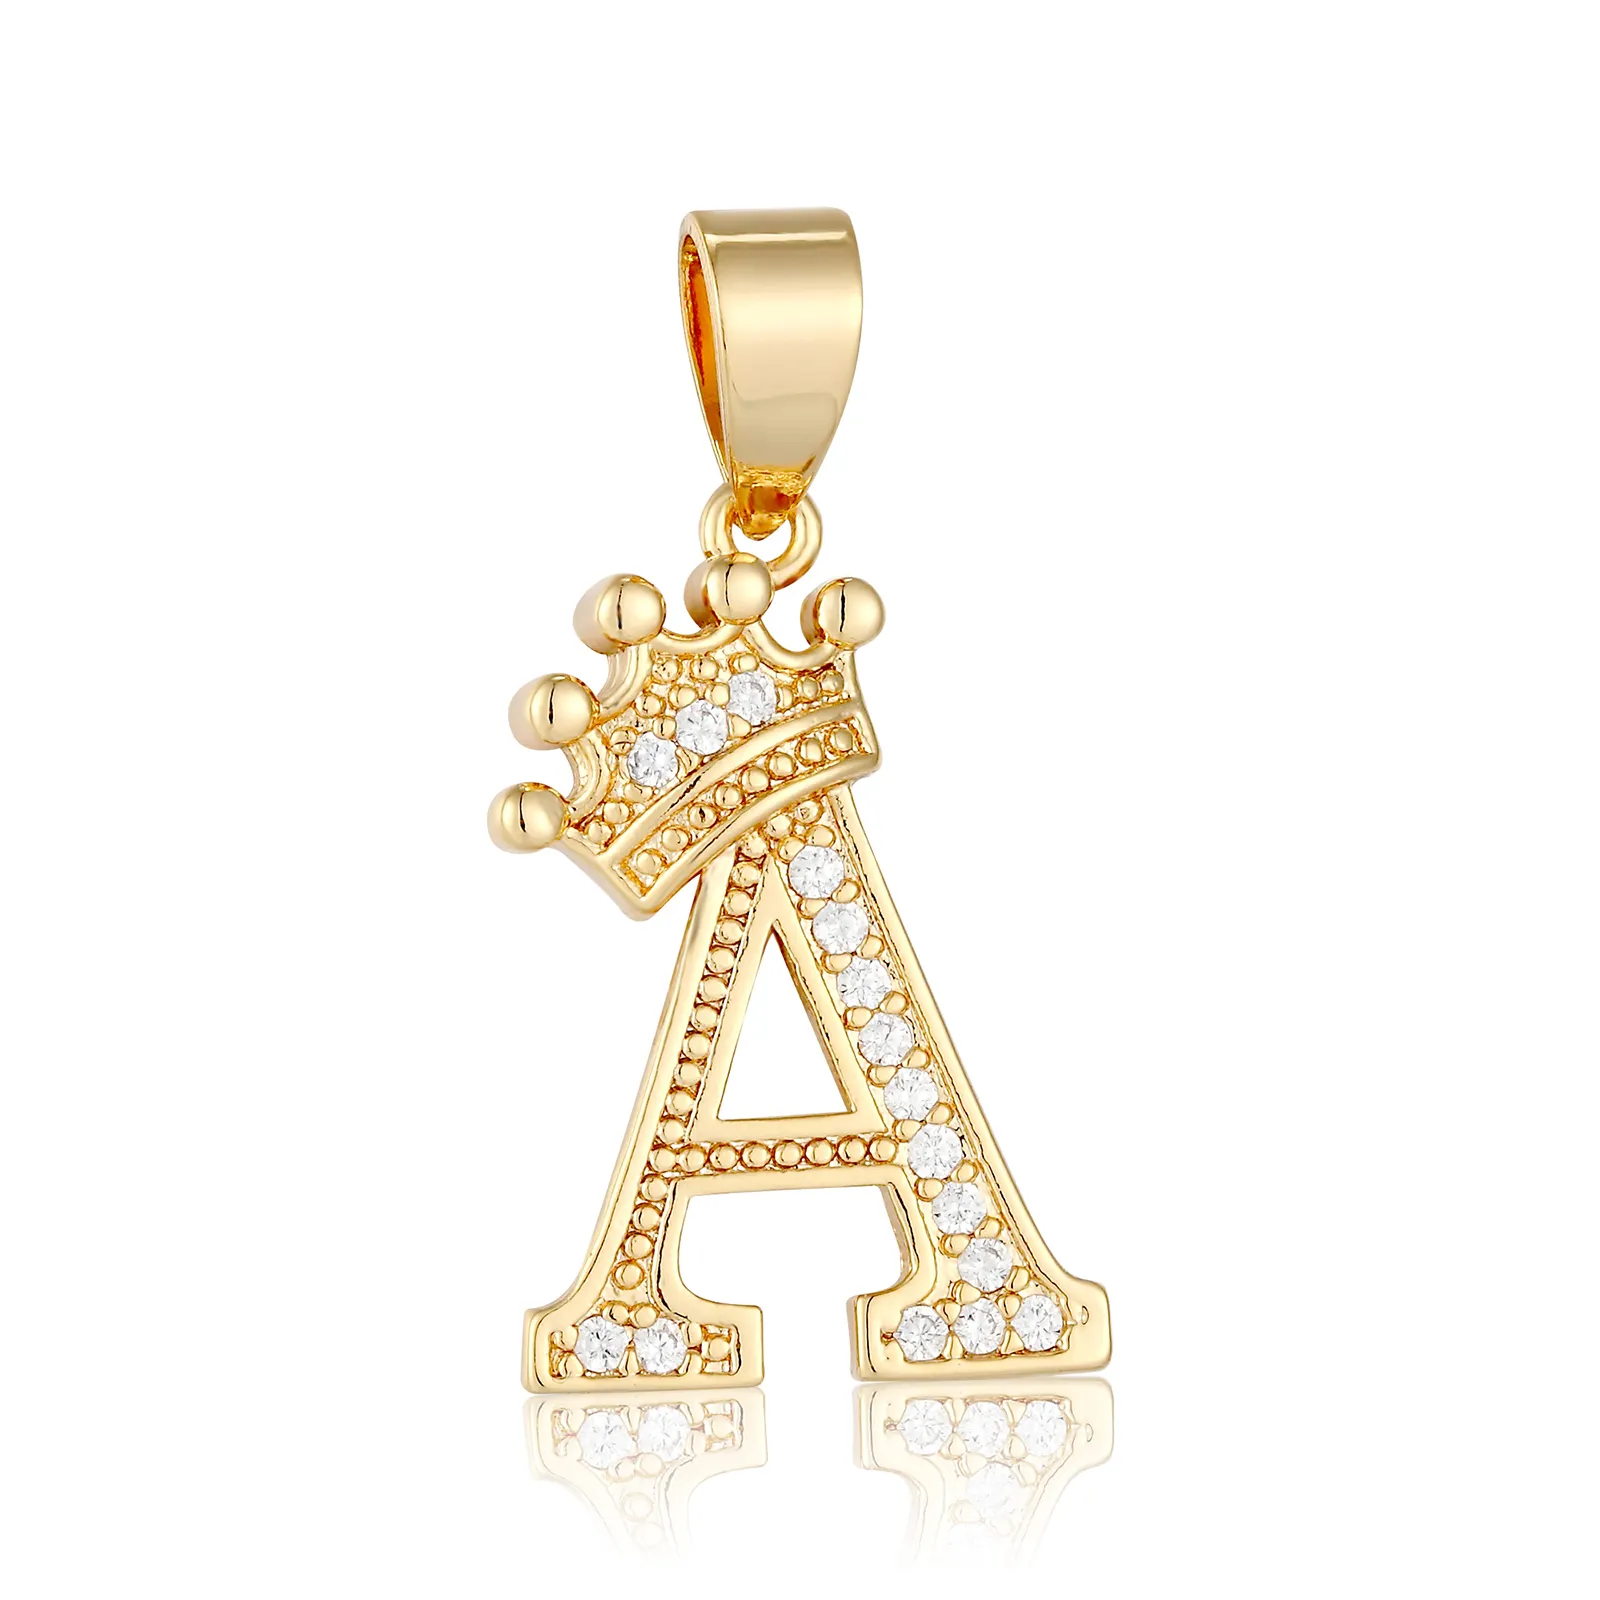 Elfic 26 letters Fashion Pendant copper plated gold necklace pendant,a set of initials pendant